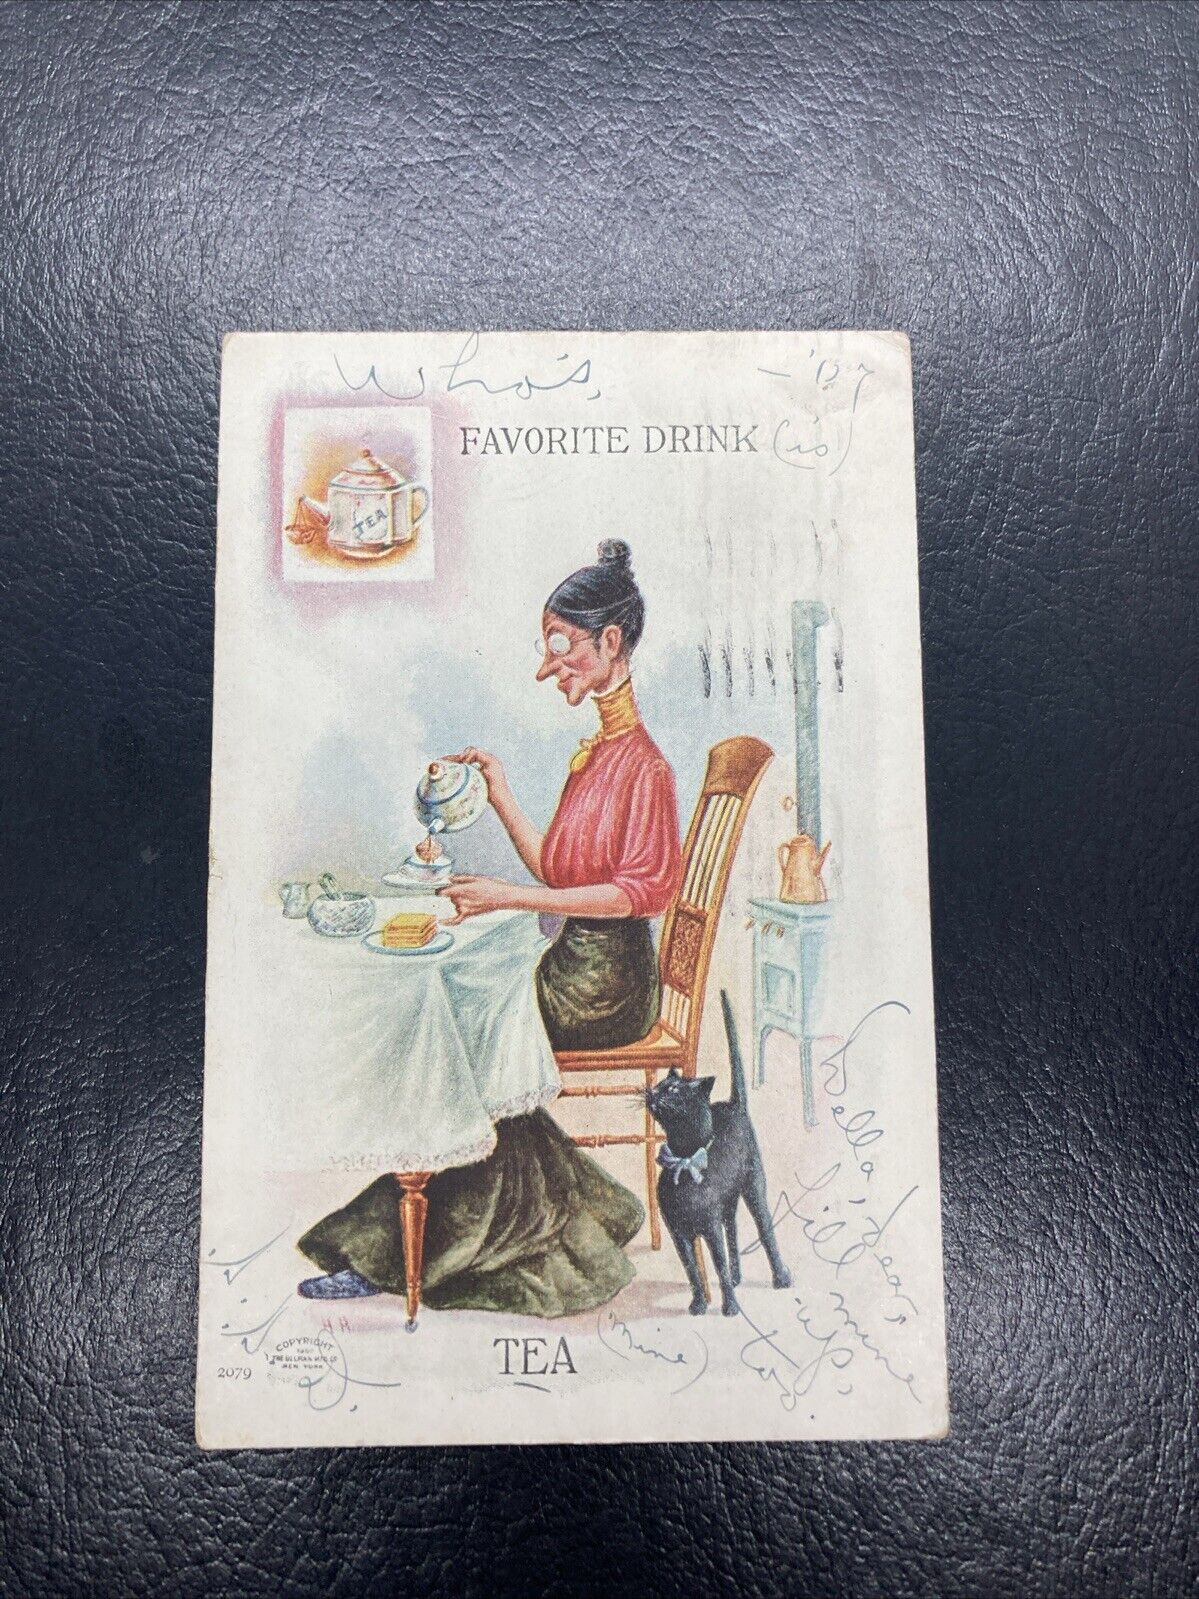 1907 Old Lady , Black Cat  Favorite Drink Tea Greeting Postcard